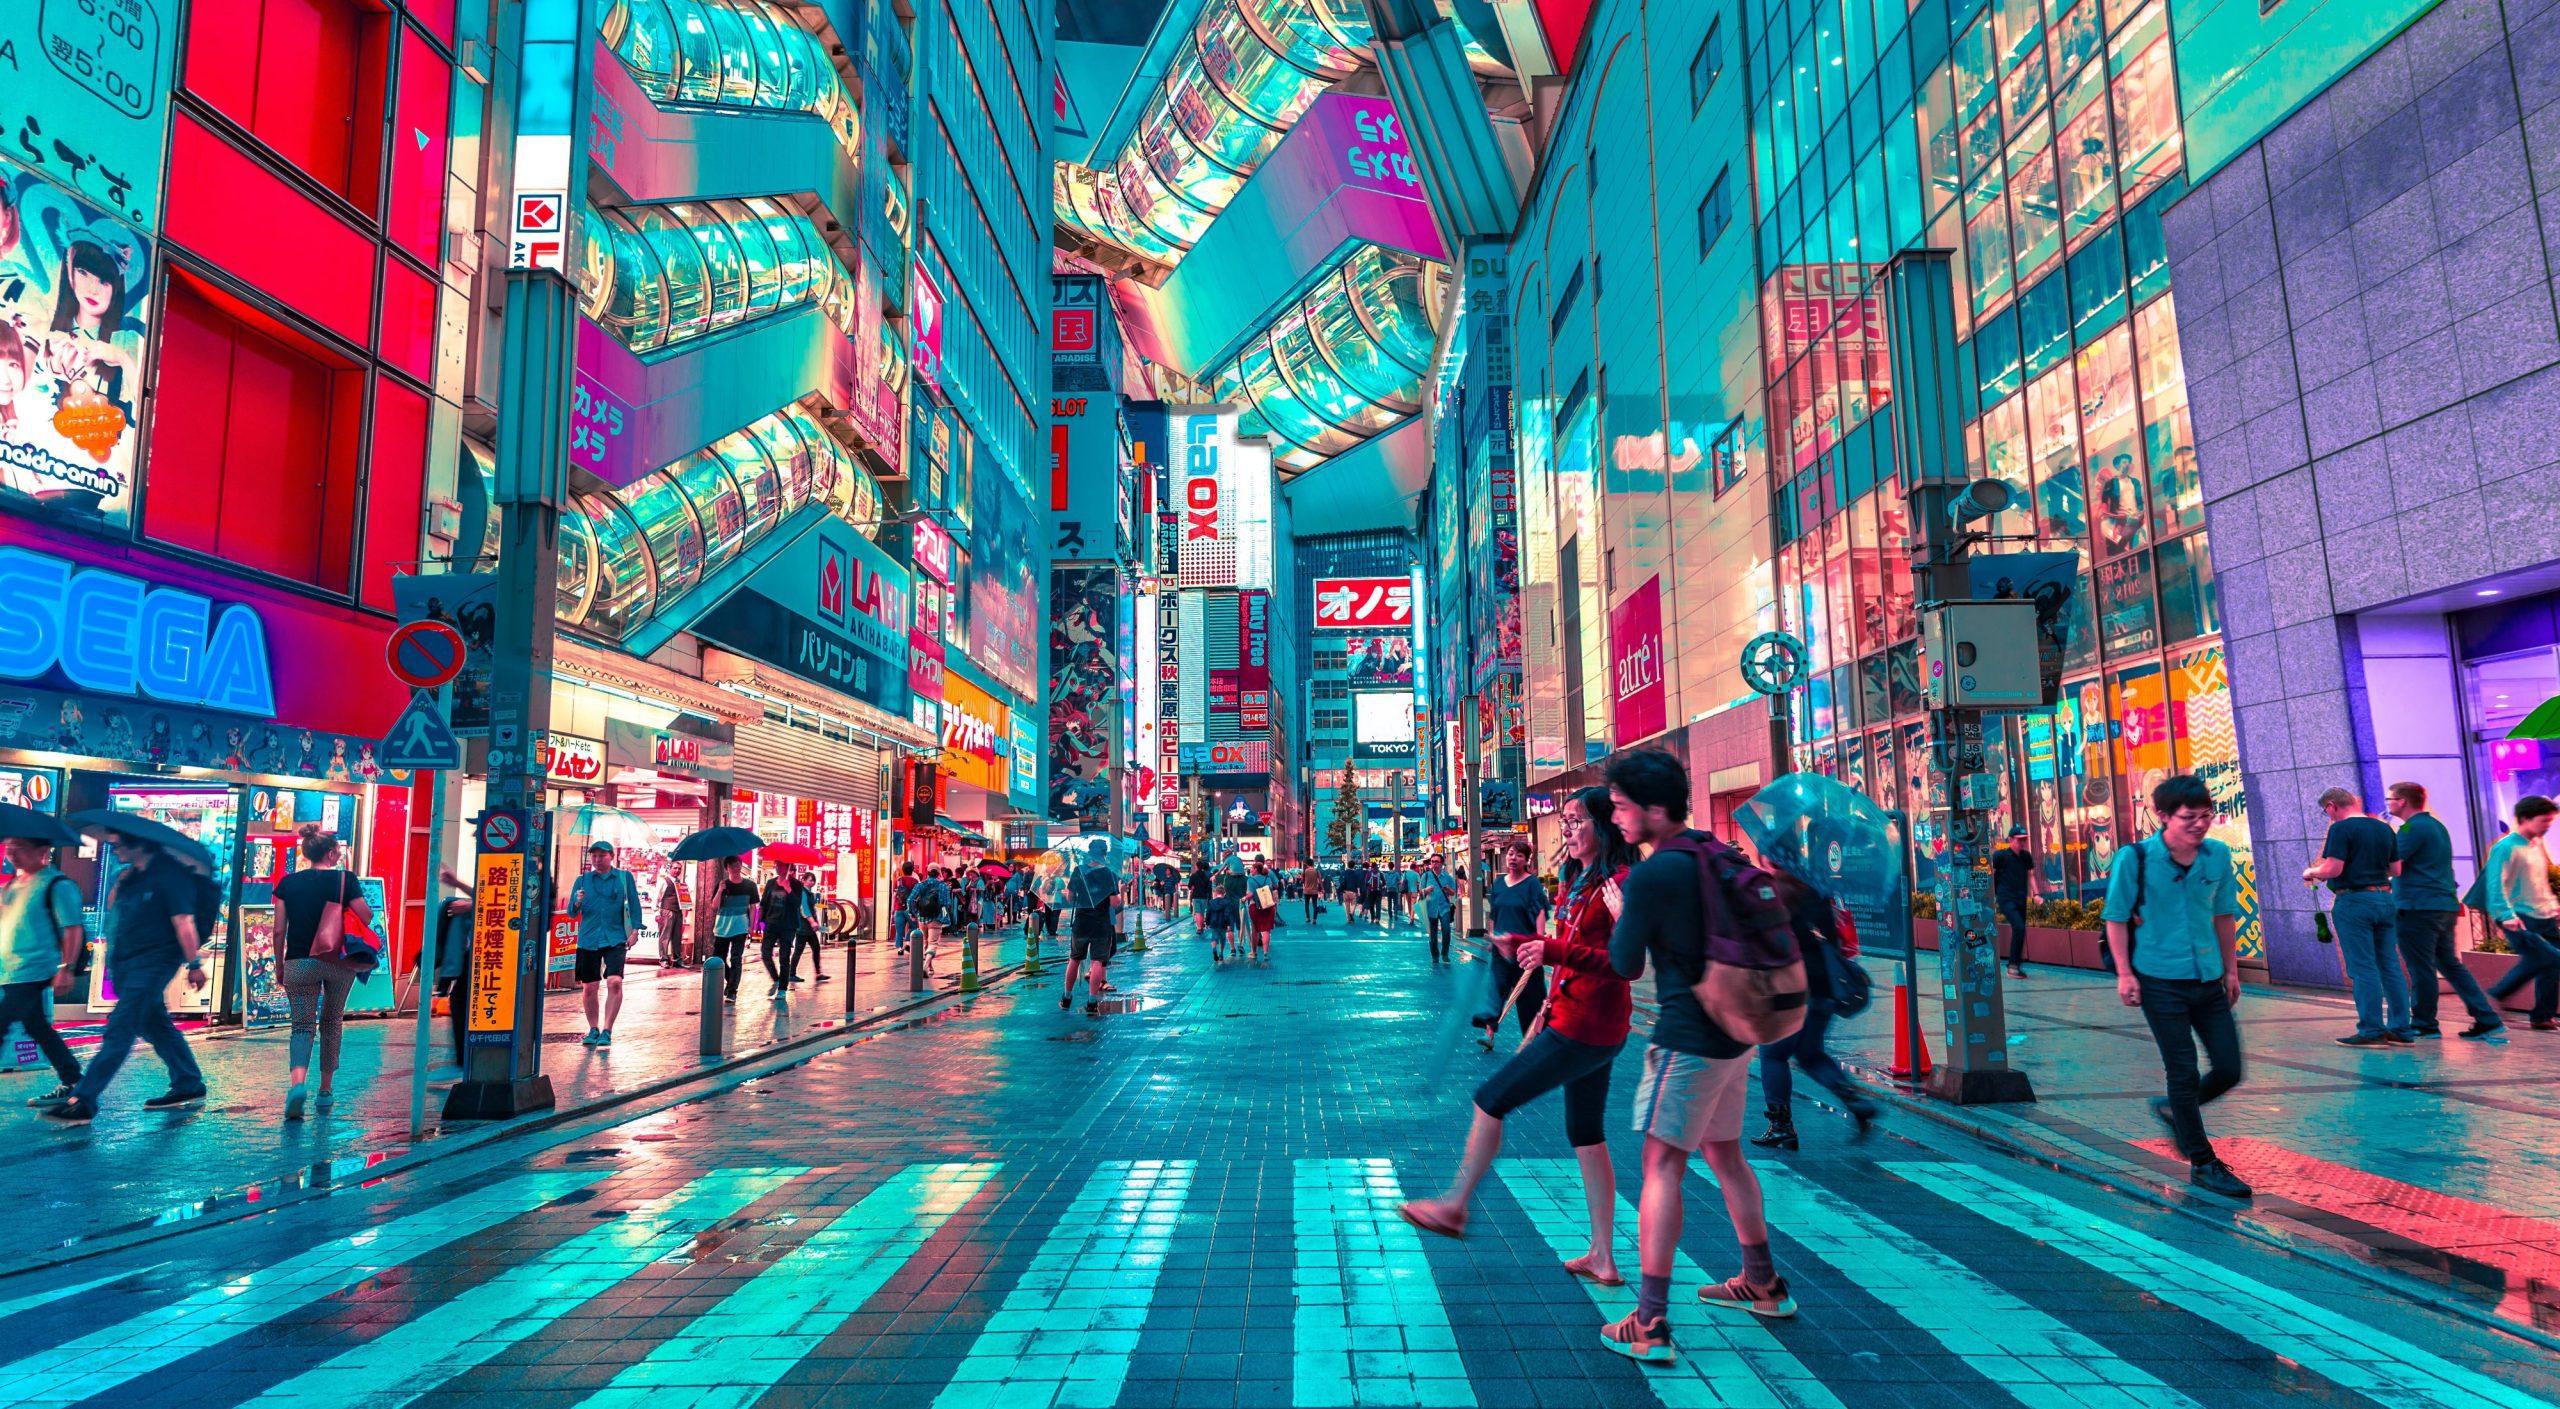 People walking around a neon-lit Japanese city.